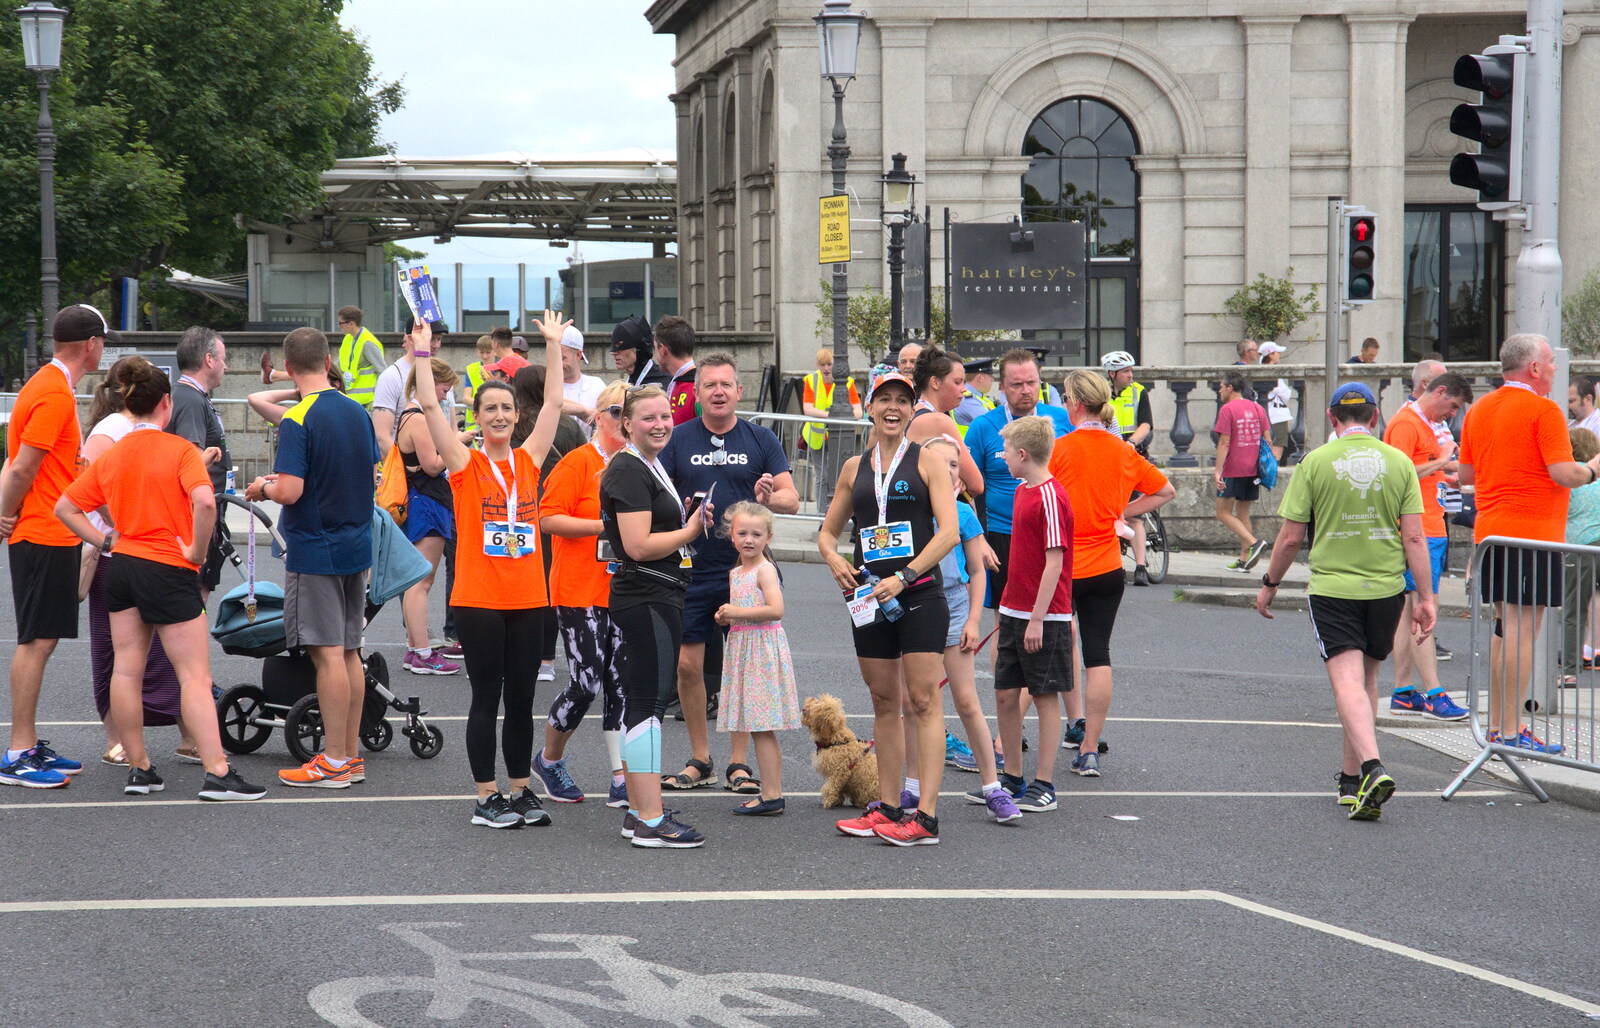 Runner gather near the DART station from The Dún Laoghaire 10k Run, County Dublin, Ireland - 6th August 2018